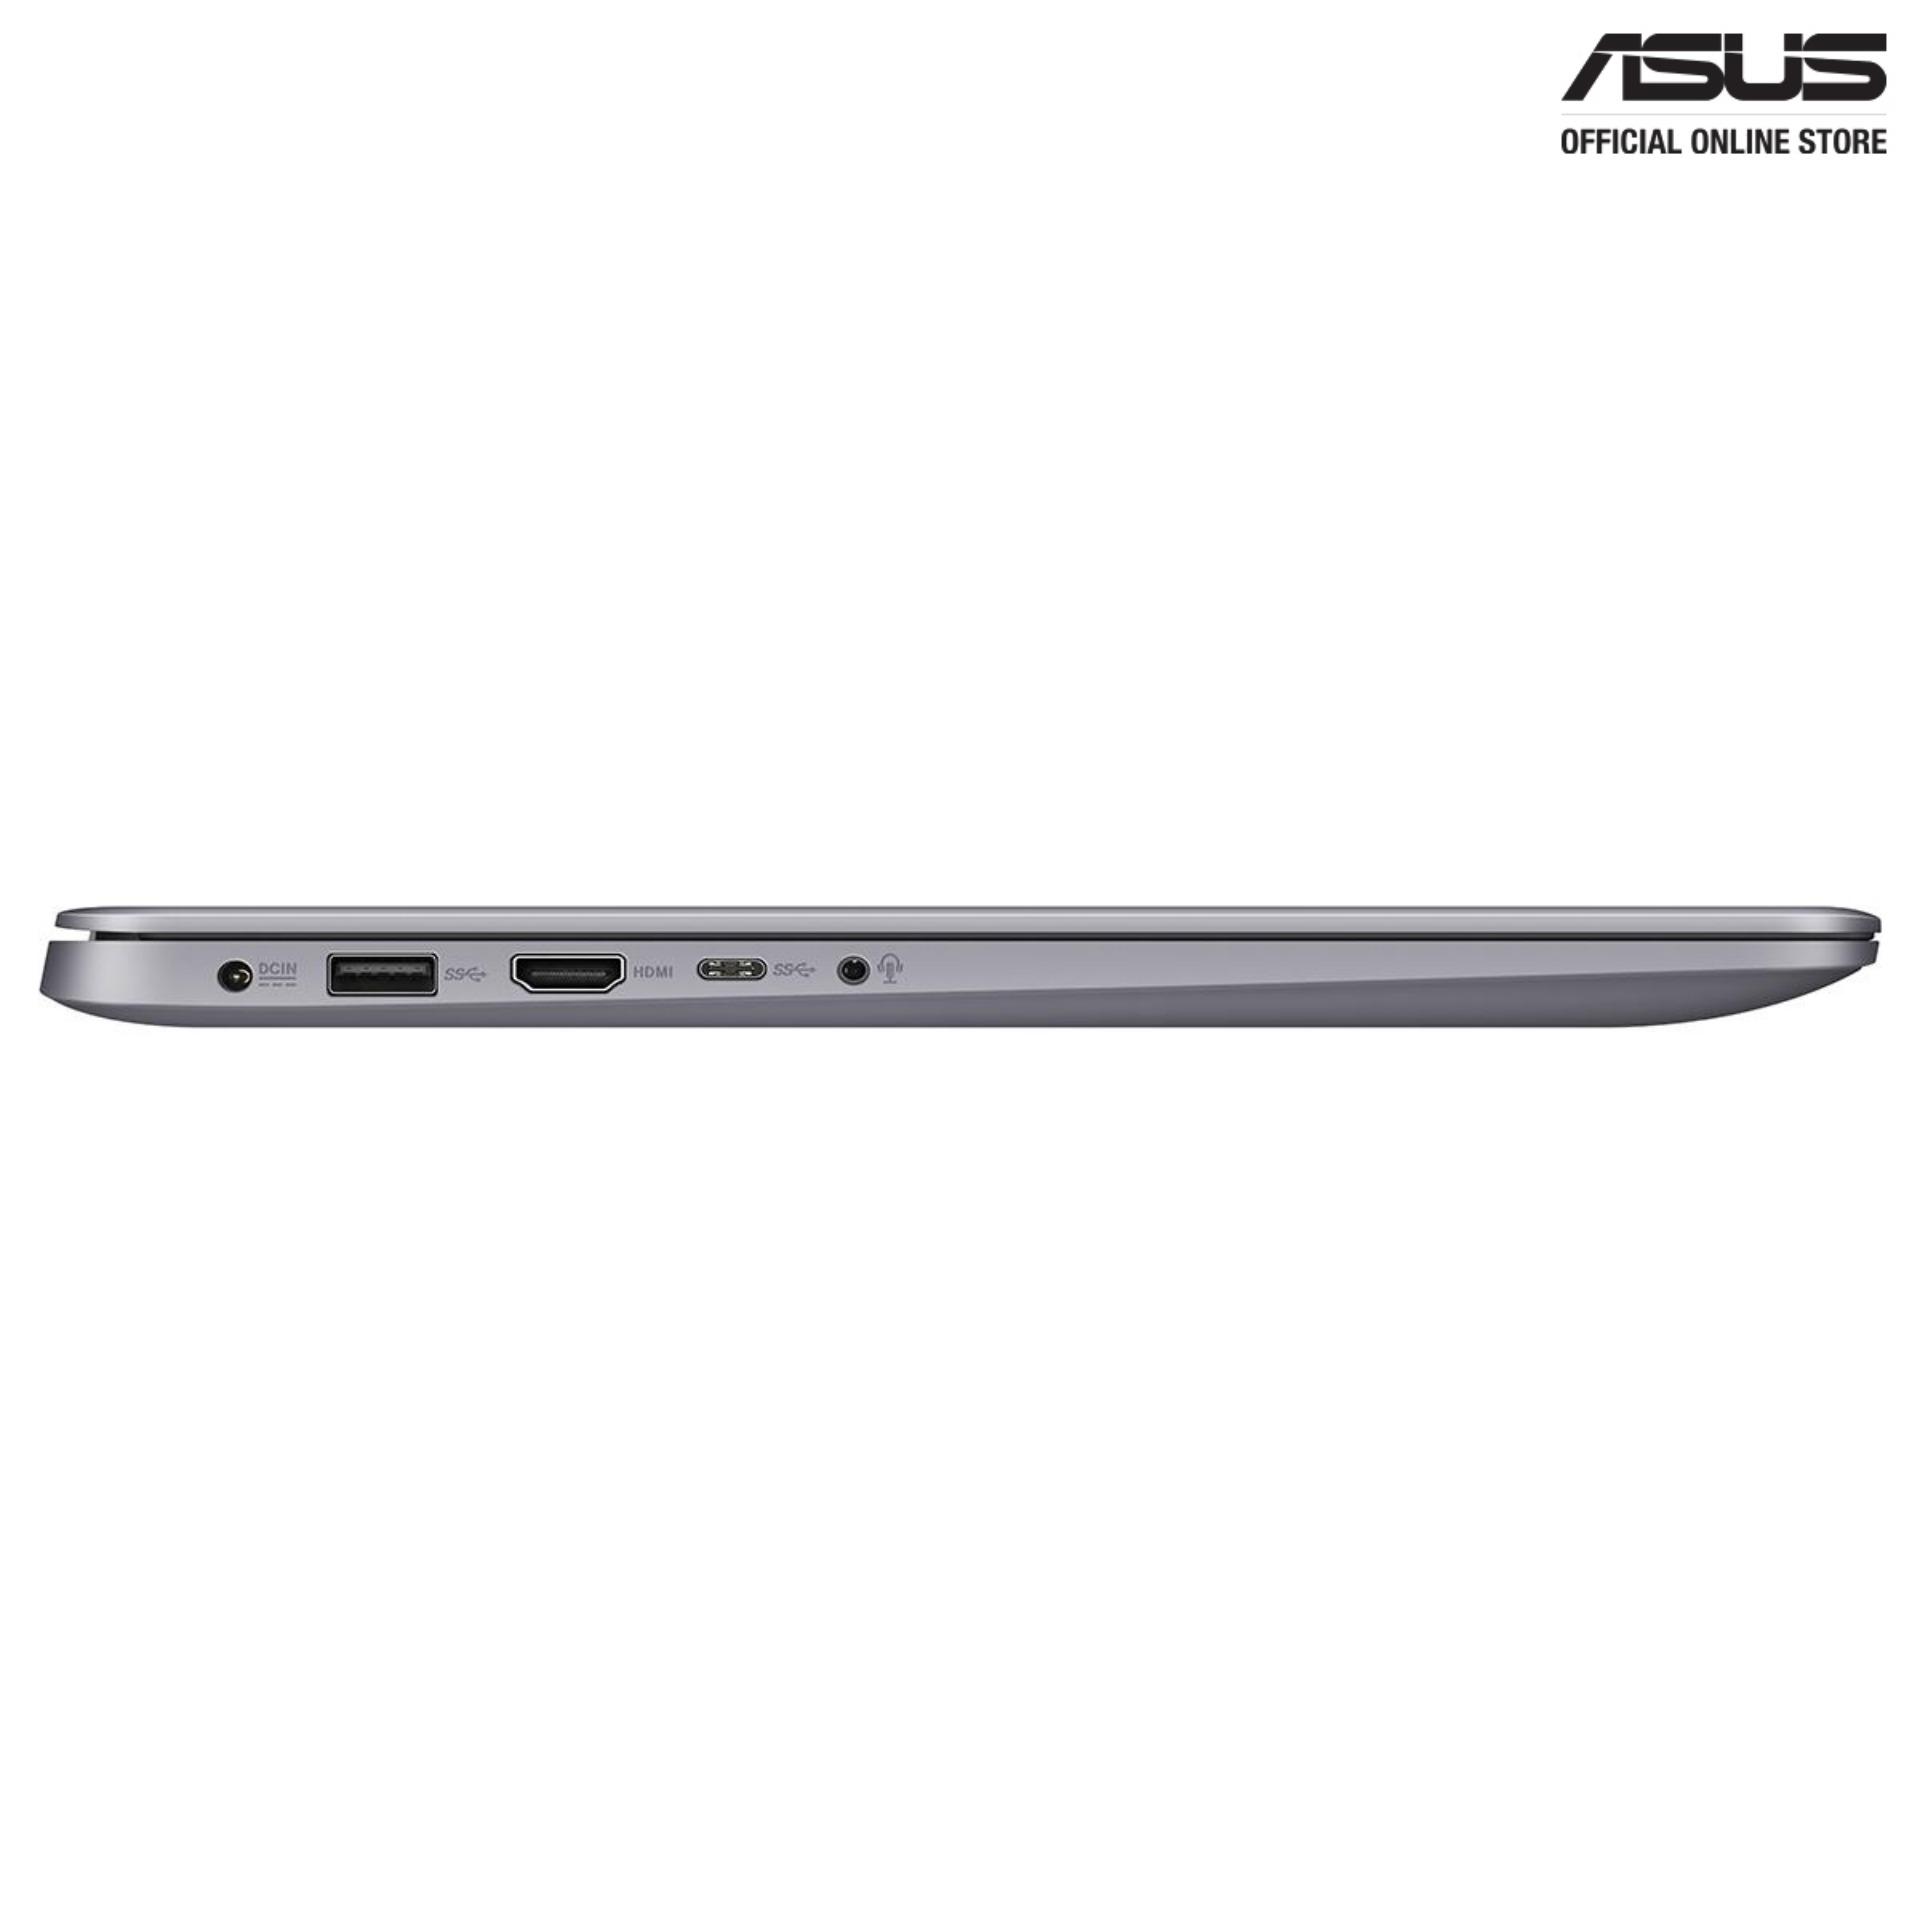 ASUS VivoBook S410UN-EB146TS (Star Grey)